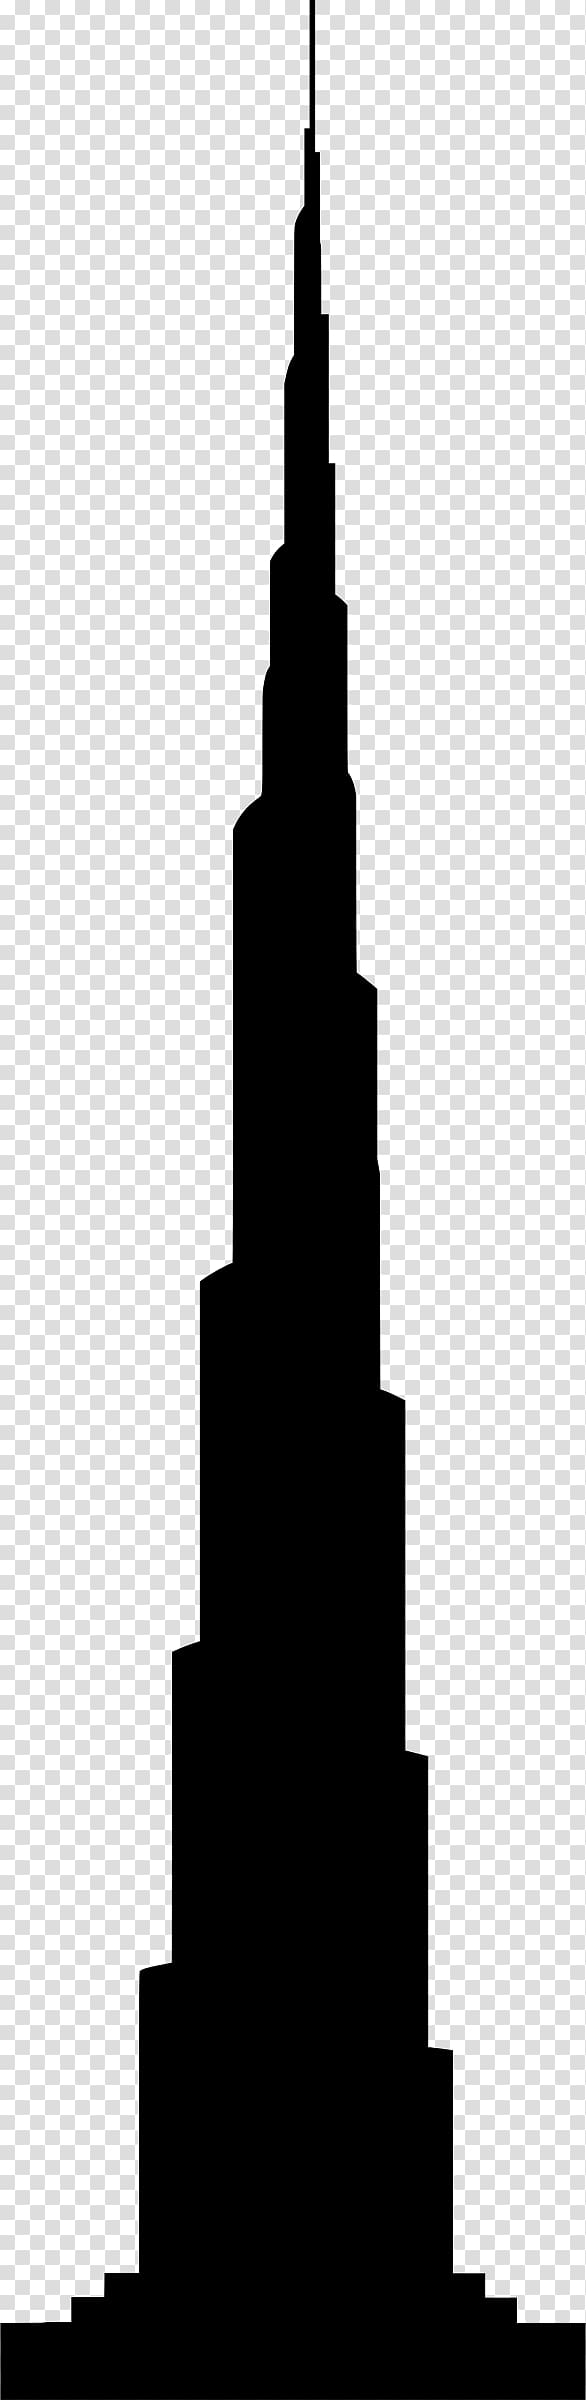 Burj Khalifa Burj Al Arab Silhouette Tower, burj khalifa transparent background PNG clipart